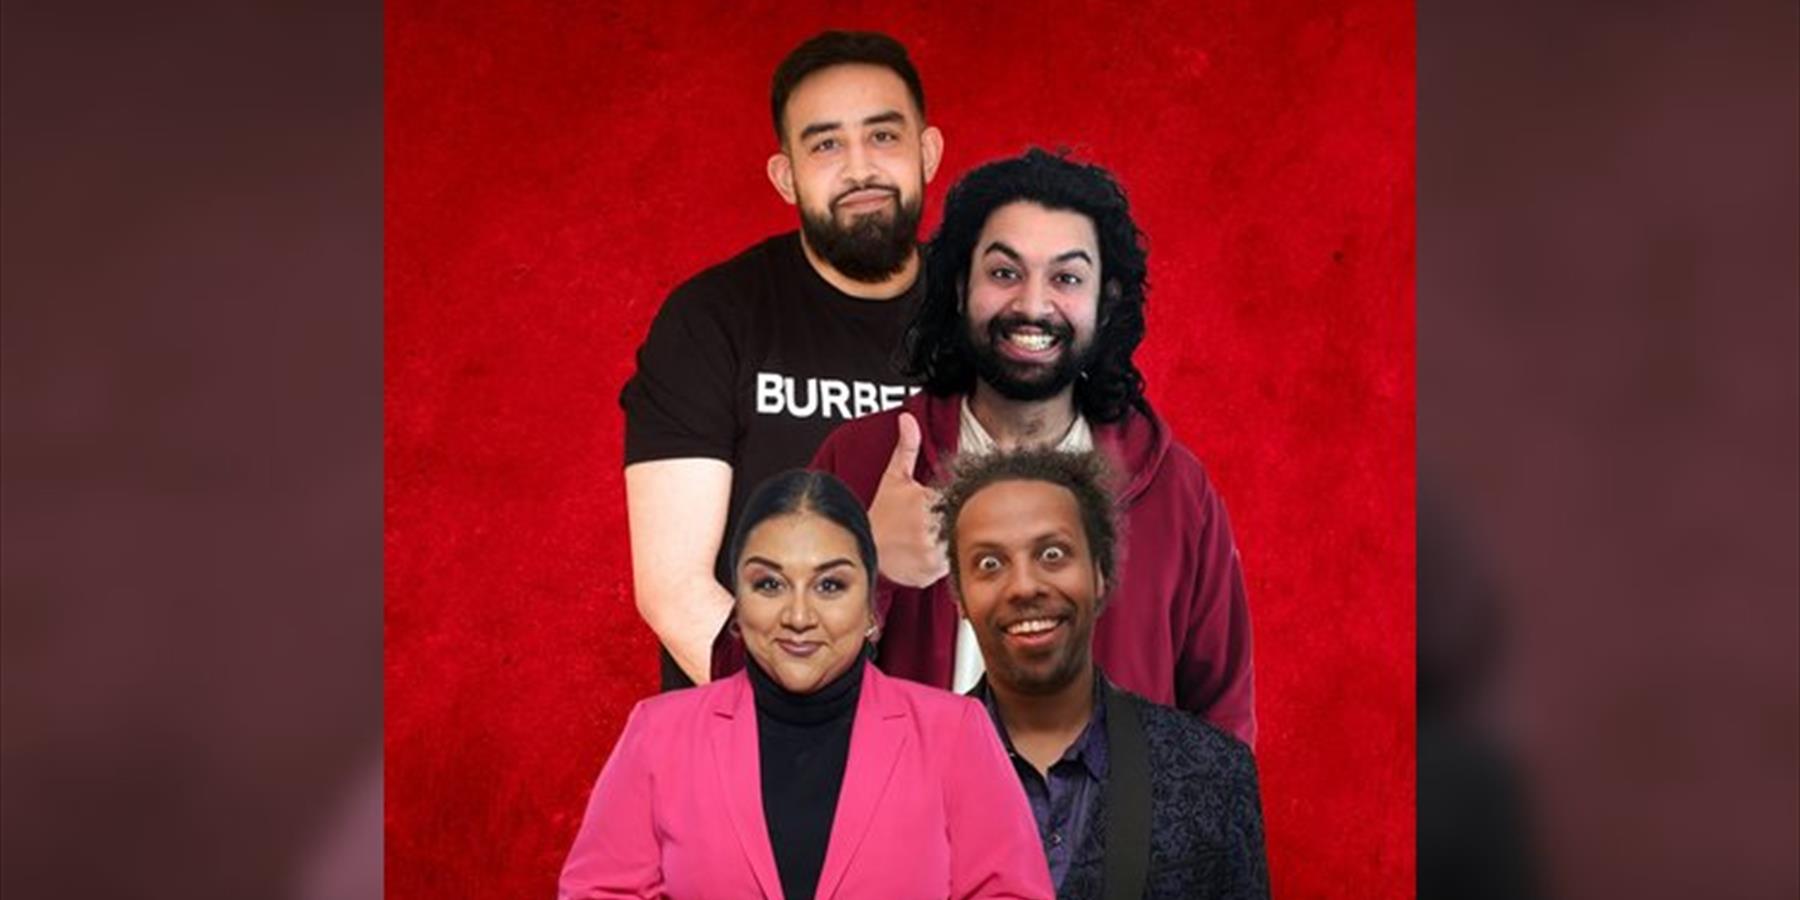 The Desi Central Comedy Show